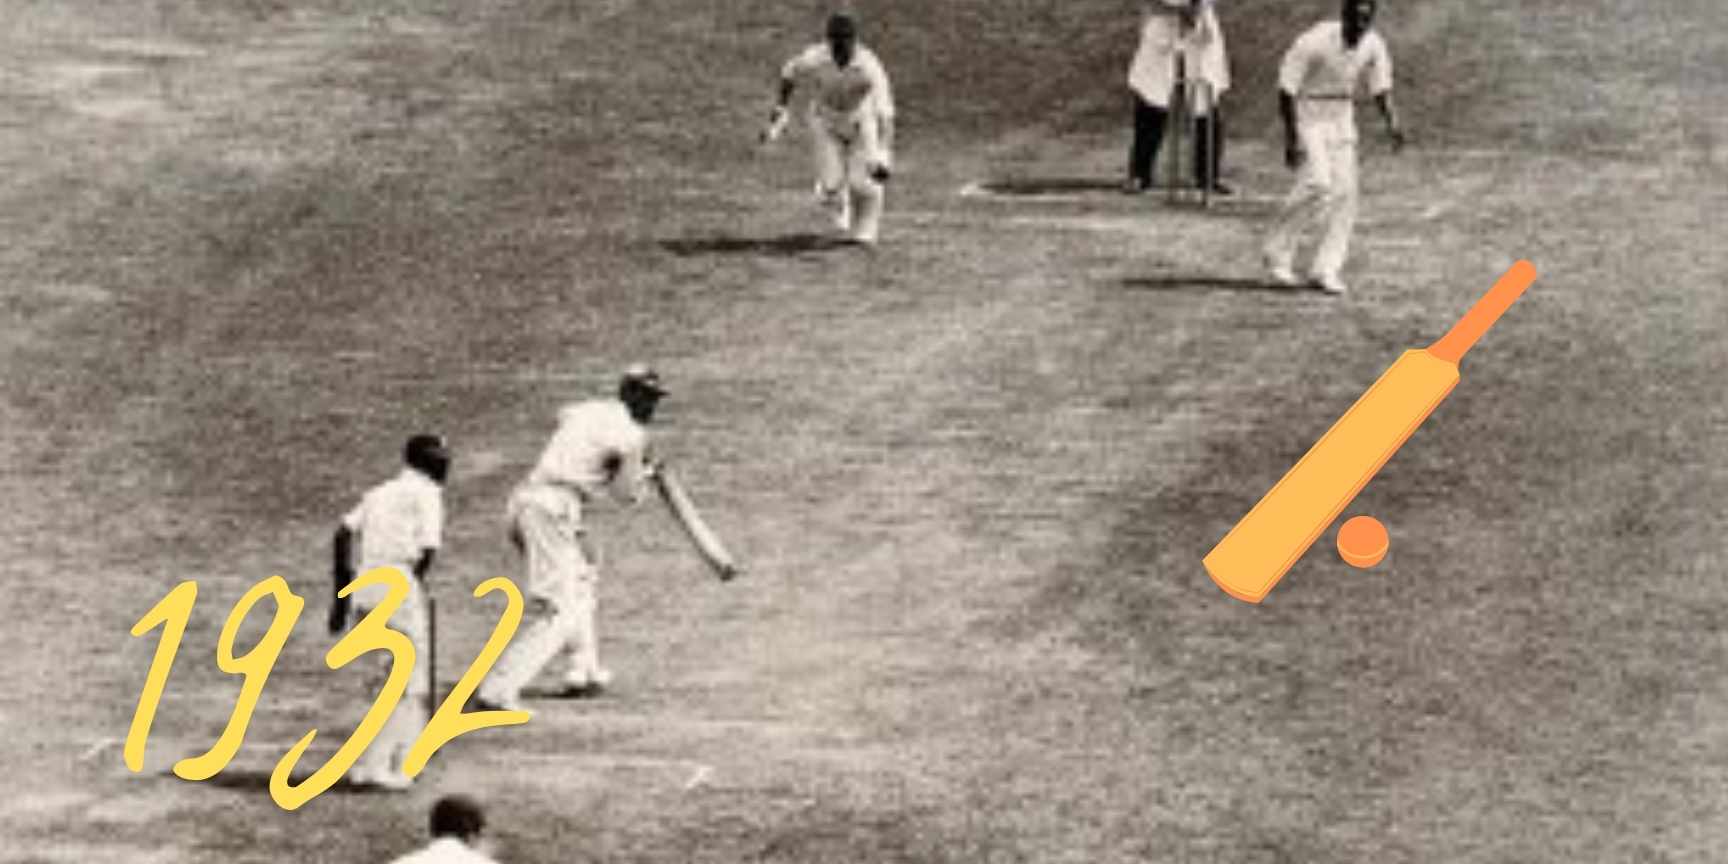 1932 cricket game